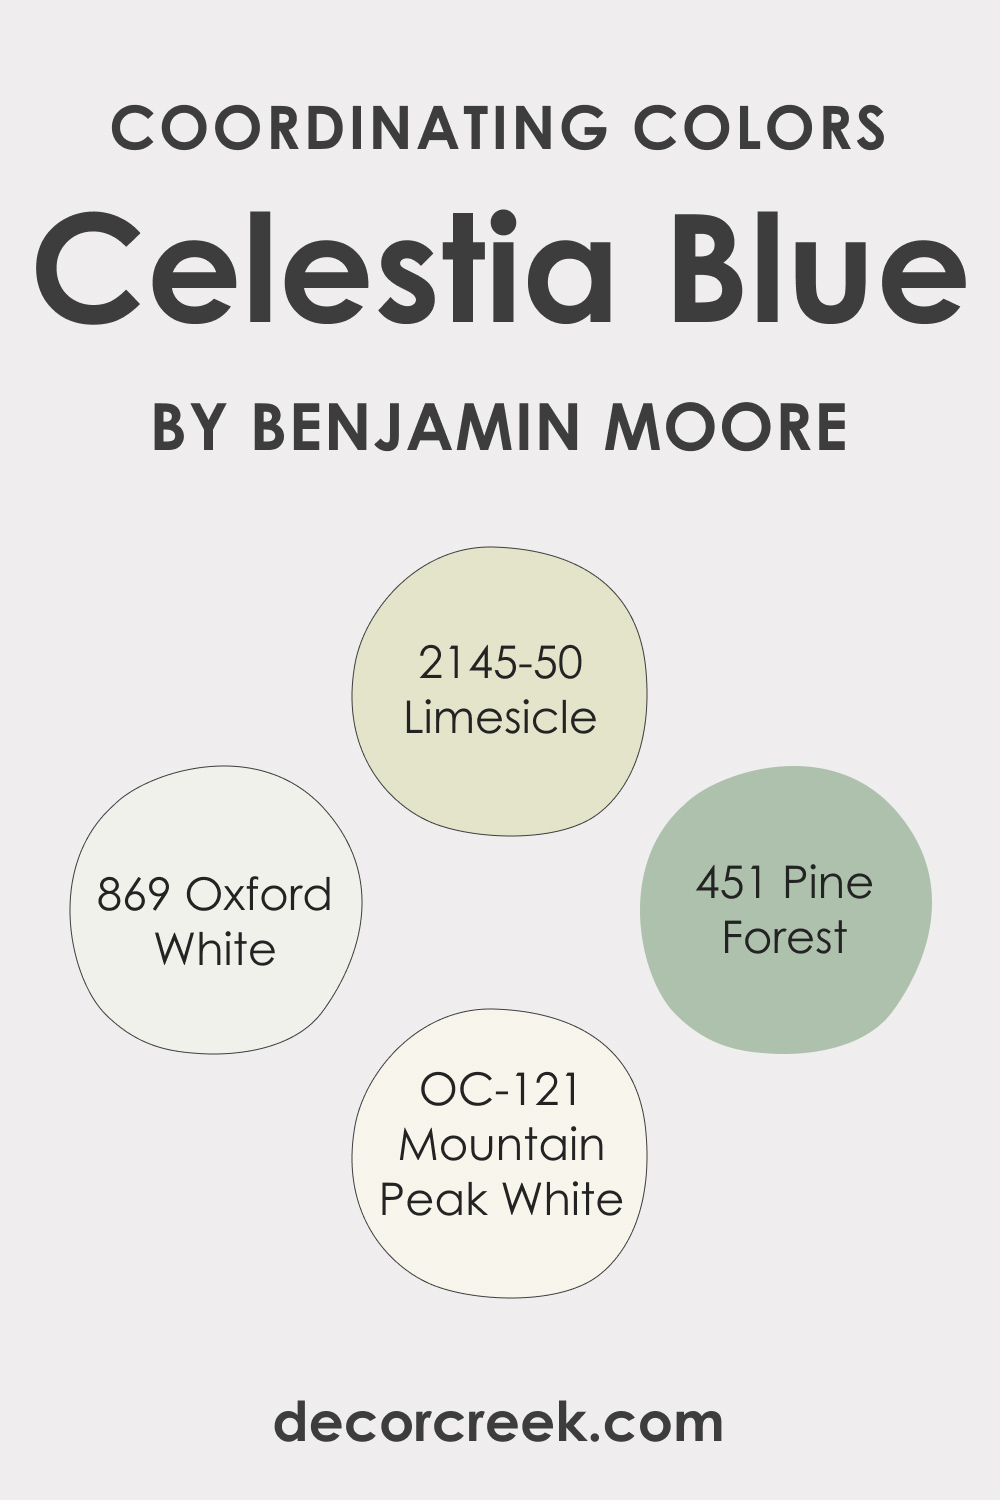 Coordinating Colors of Celestia Blue 1429